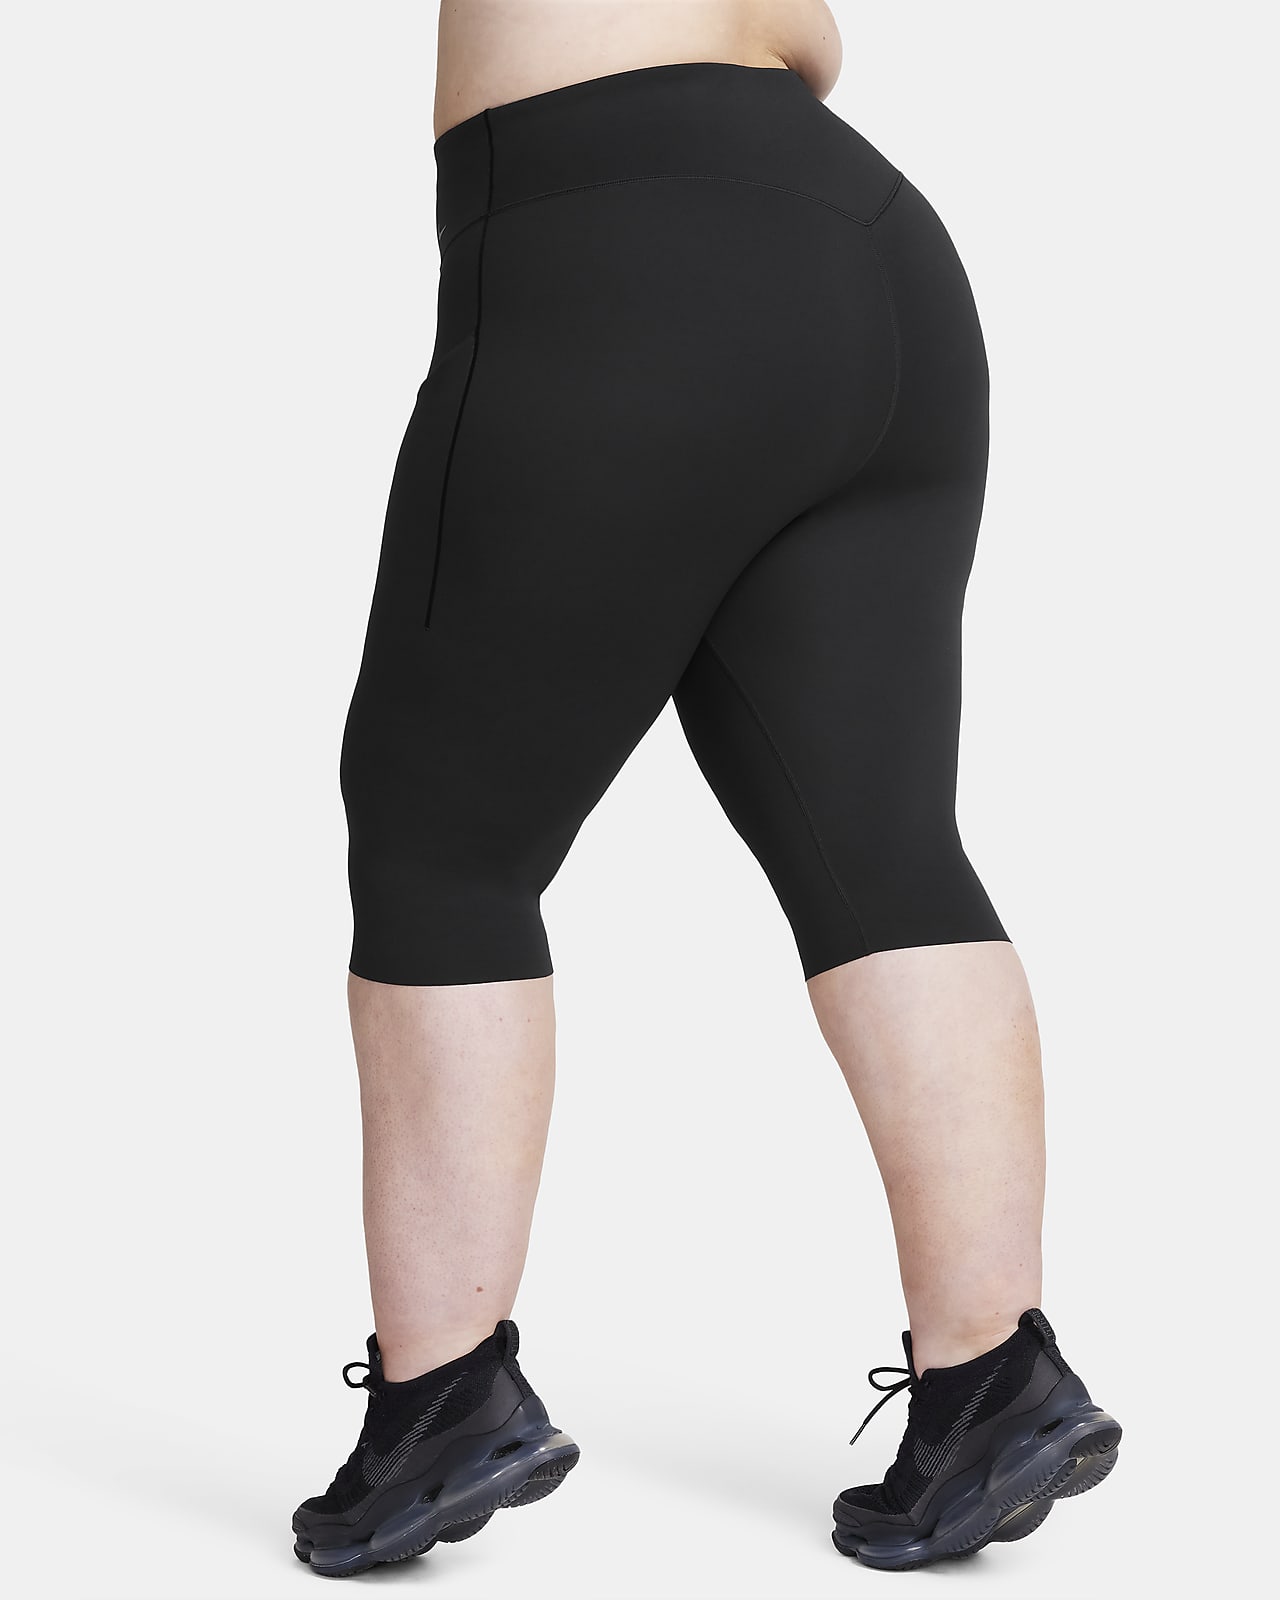  Nike Pro Girls' Training Capri Leggings (Black/White, S) :  Clothing, Shoes & Jewelry